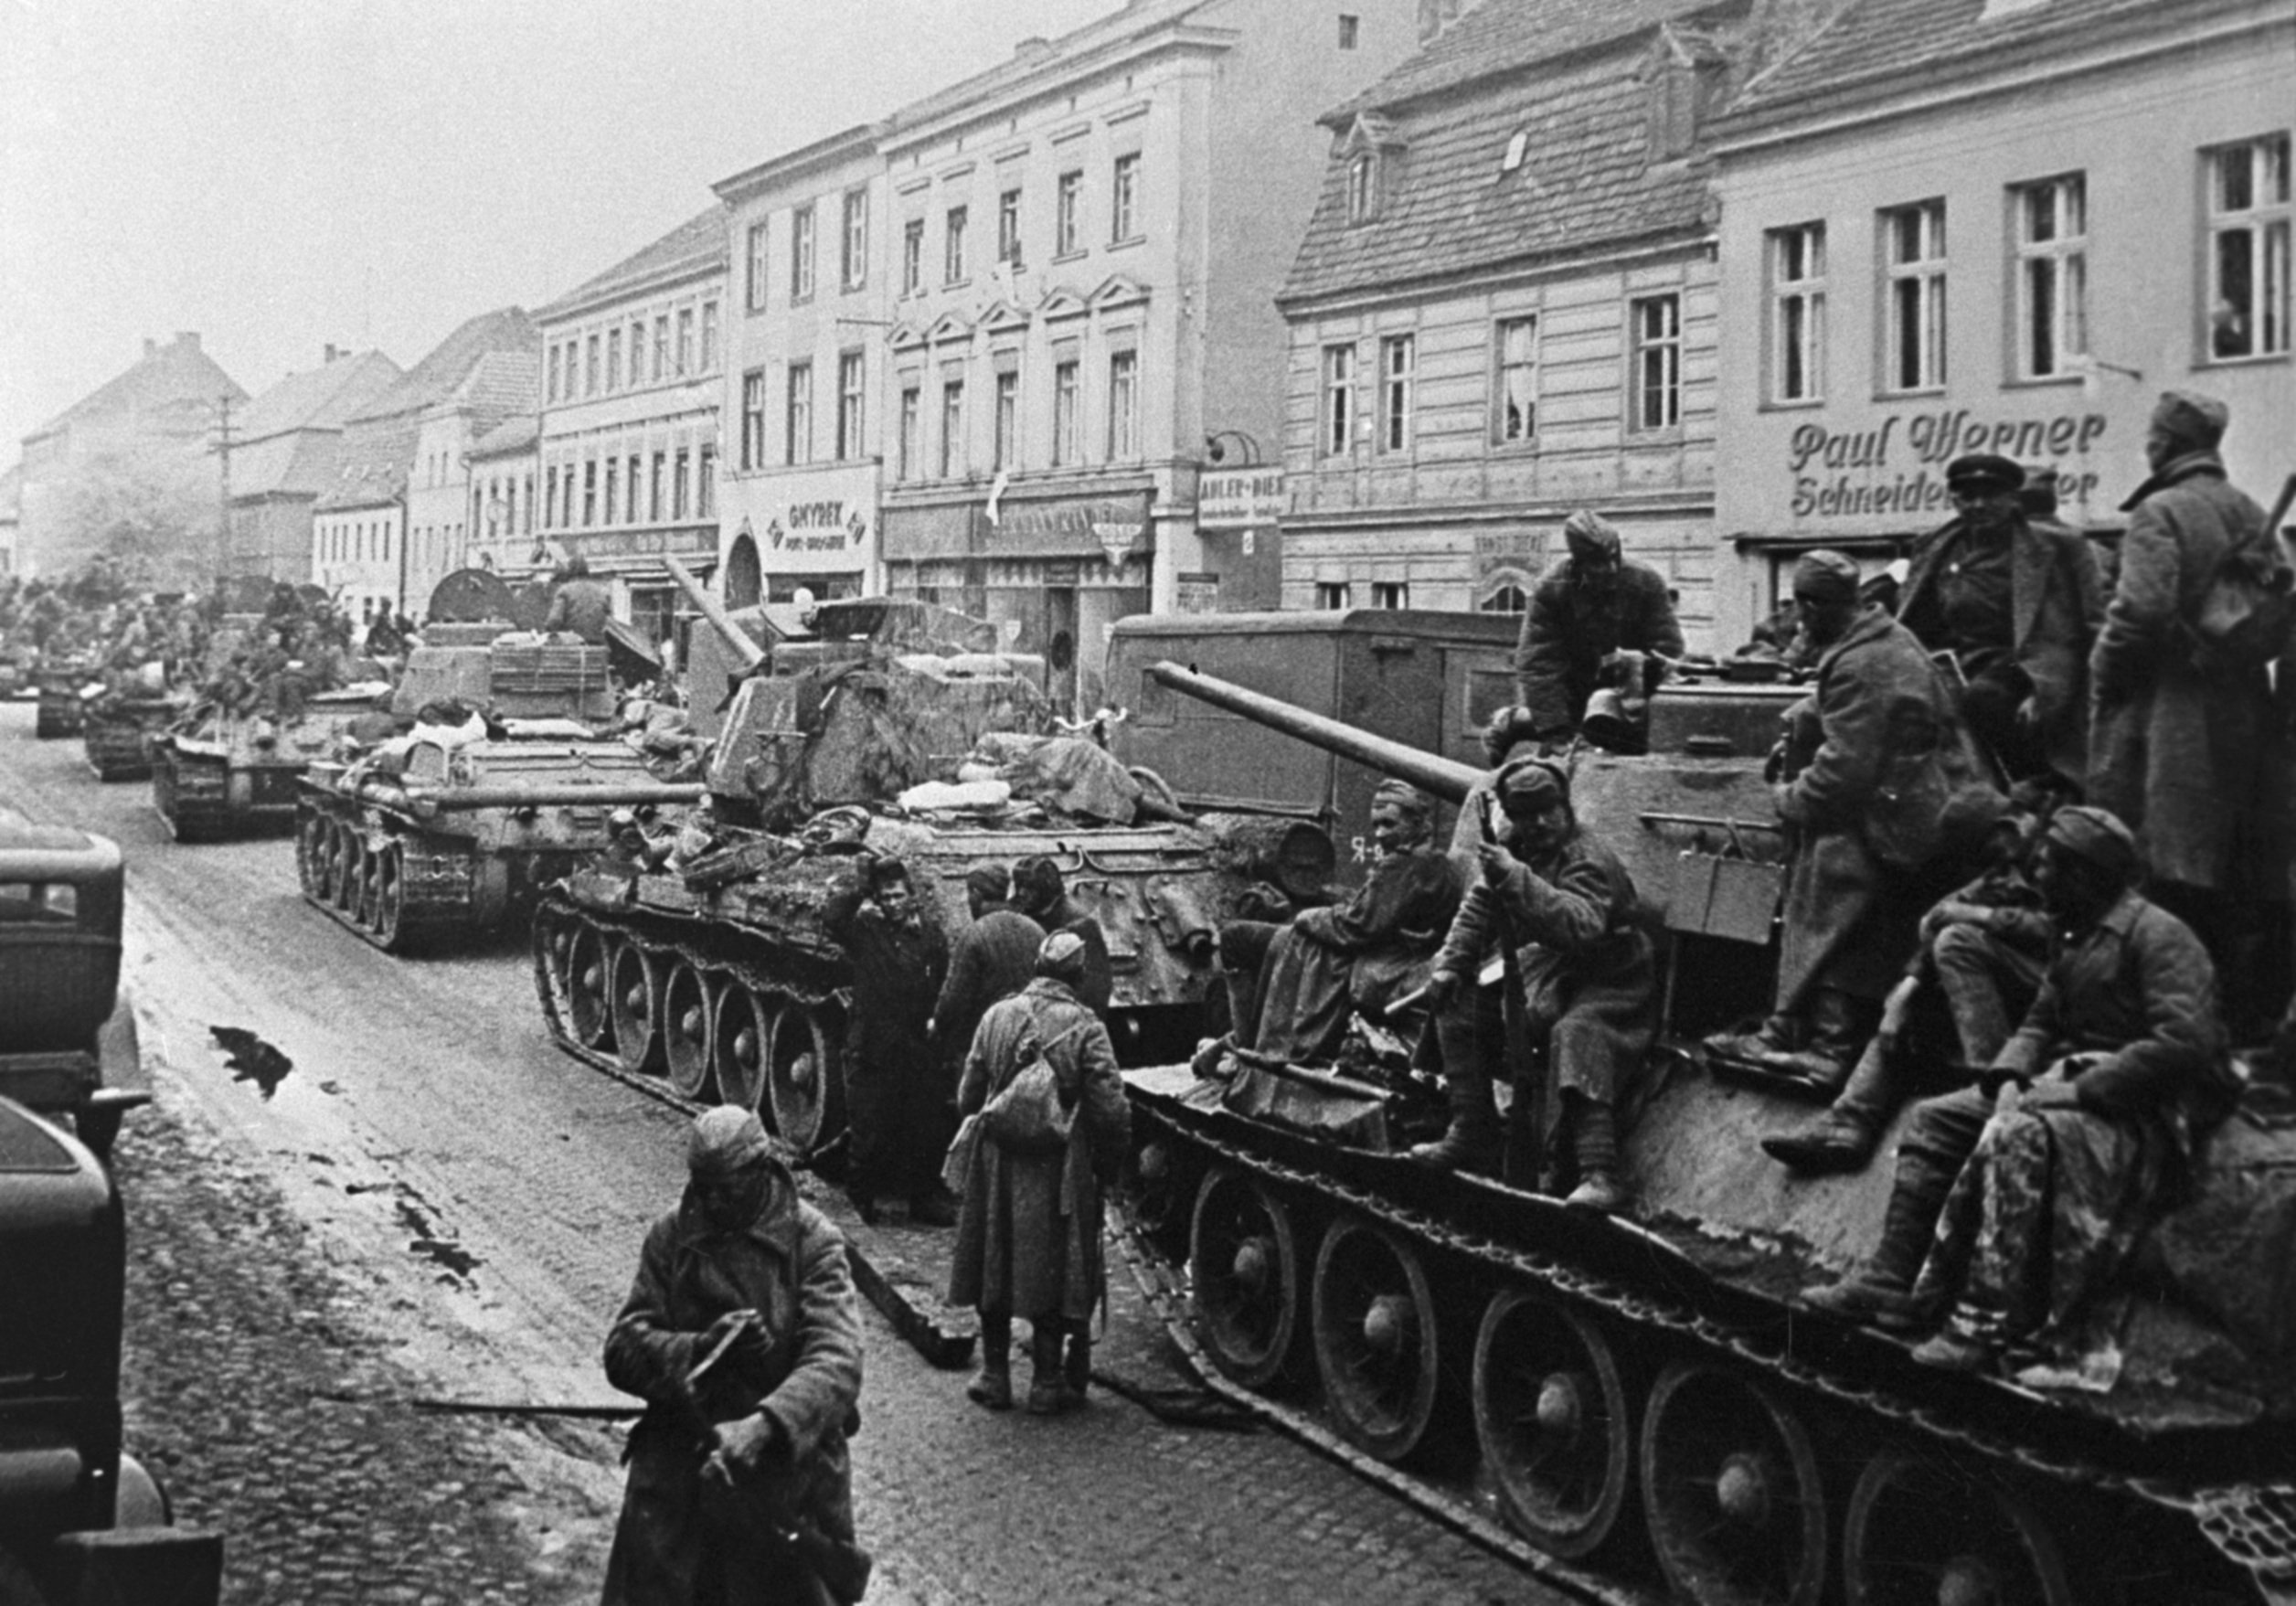 16 мая 1945 года. Берлинская наступательная операция 1945. Т 34 85 битва за Берлин.